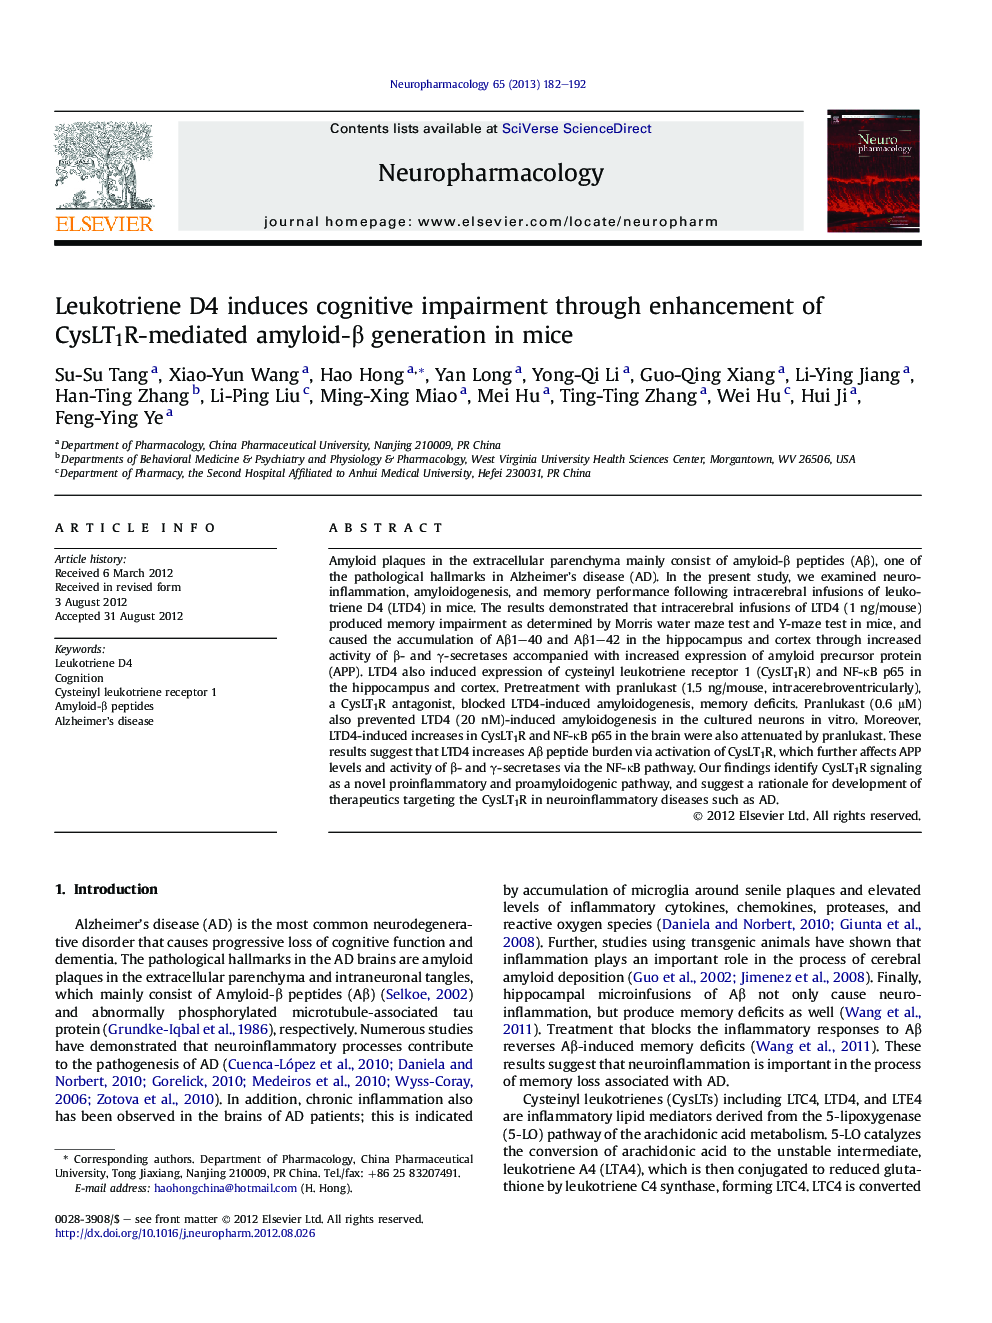 Leukotriene D4 induces cognitive impairment through enhancement of CysLT1R-mediated amyloid-Î² generation in mice